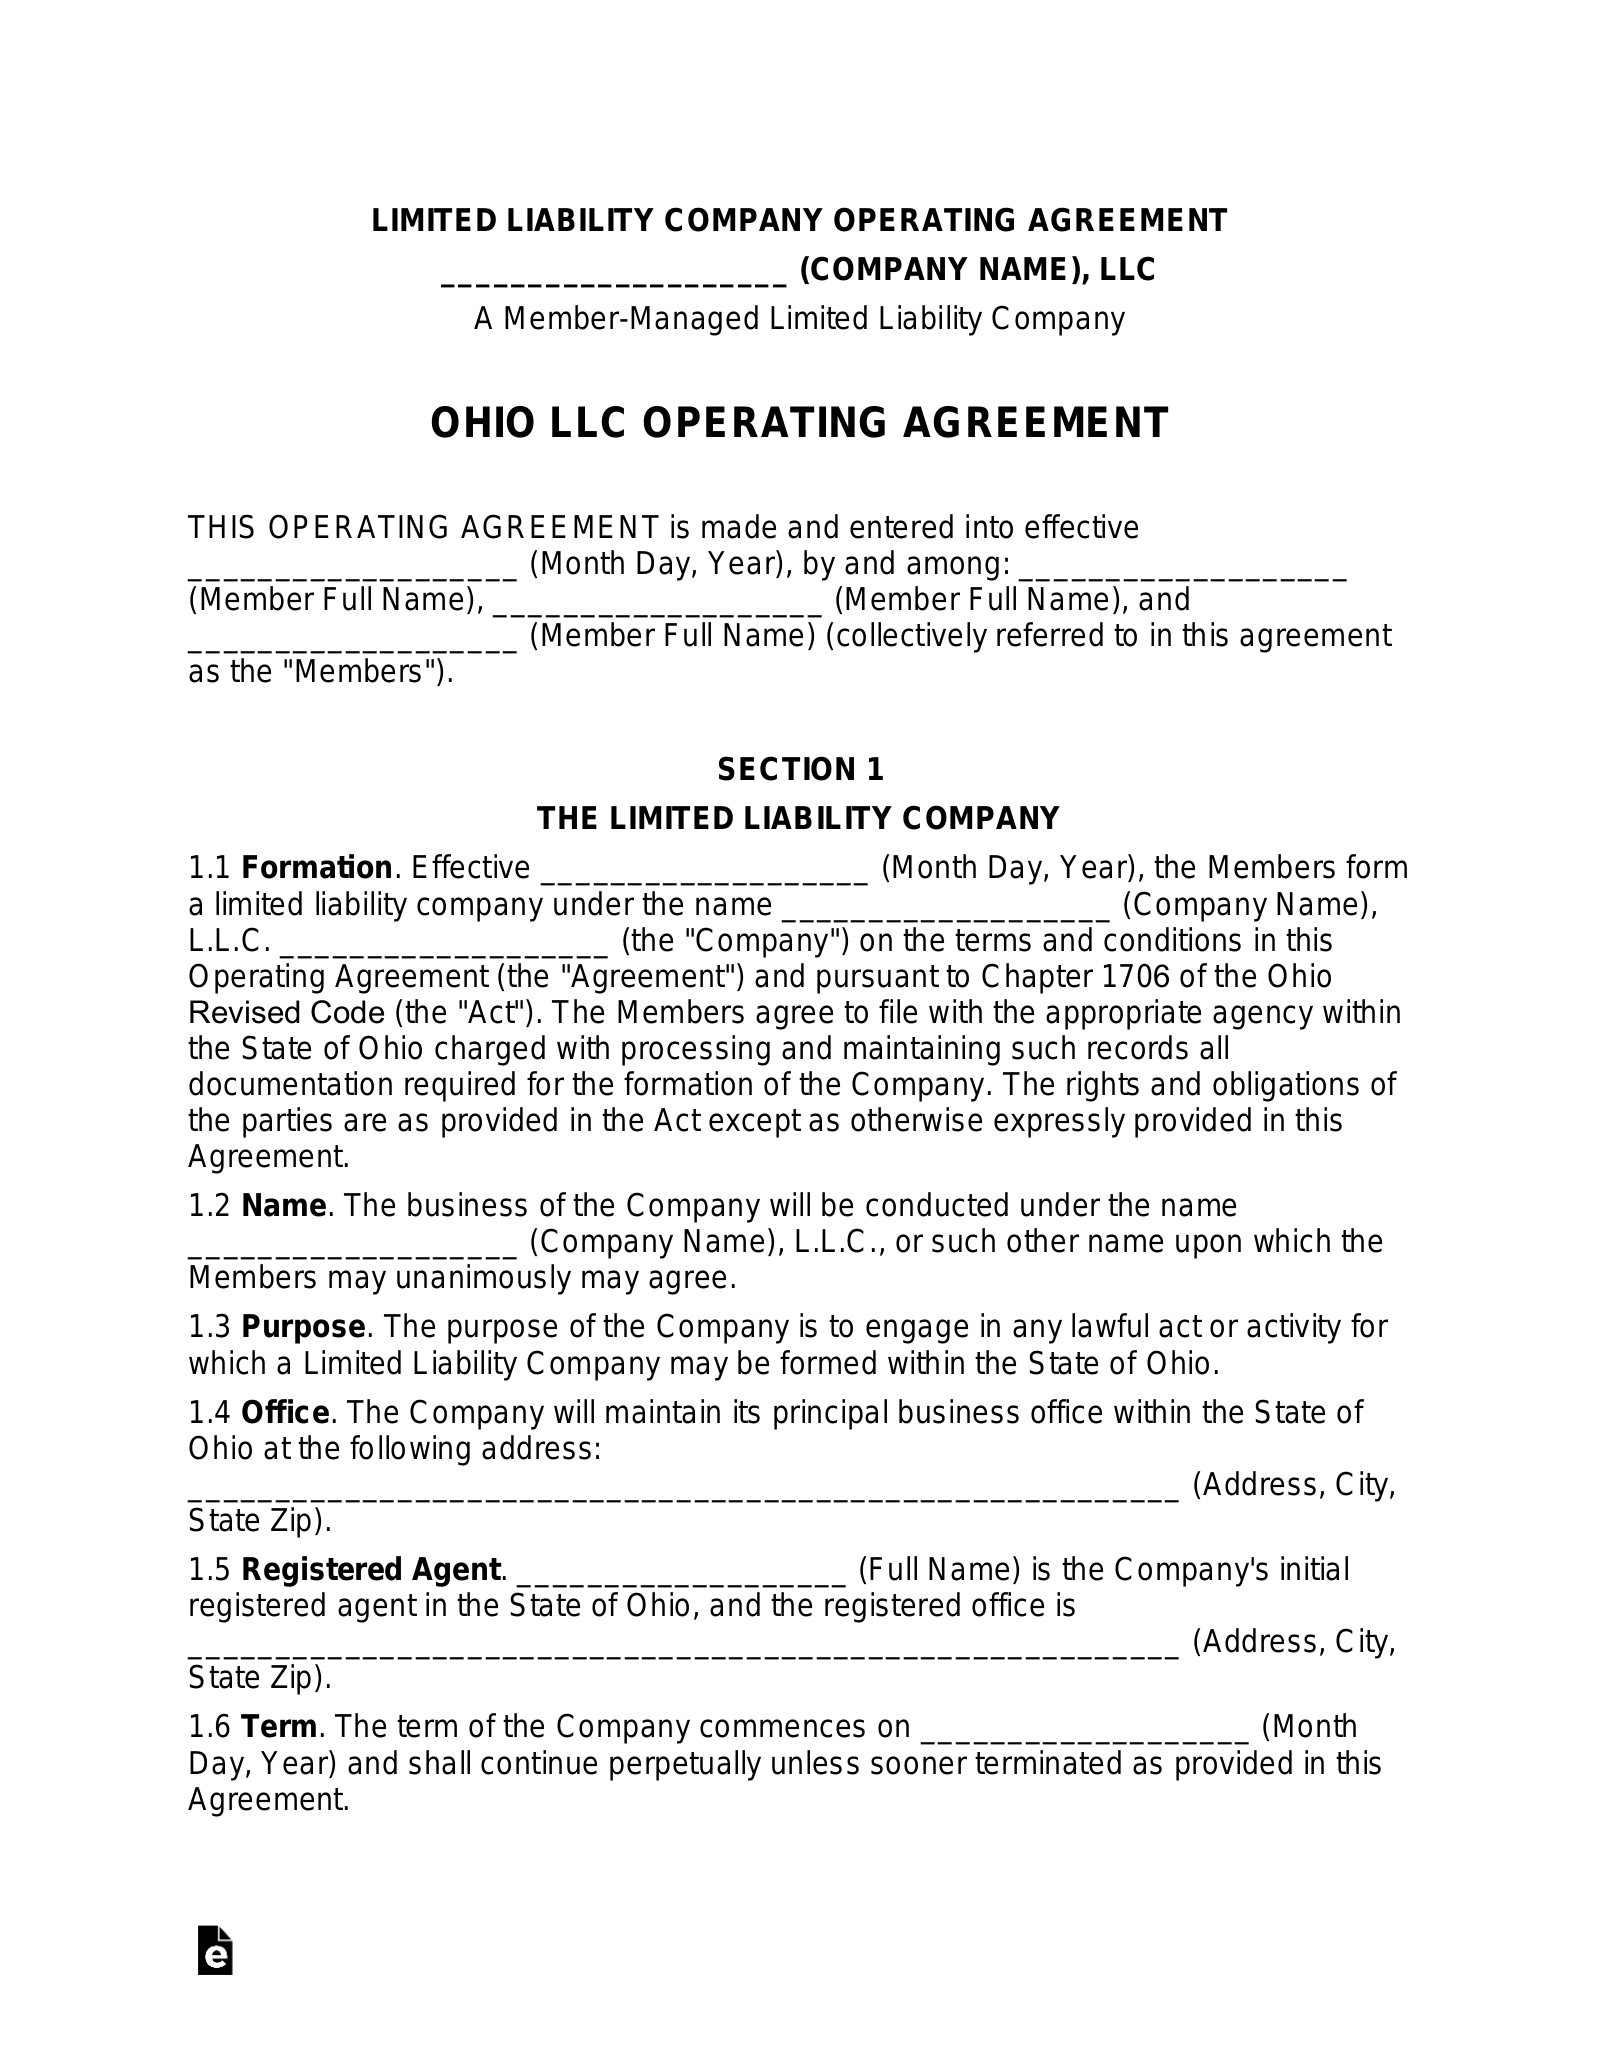 Ohio Multi-Member LLC Operating Agreement Form